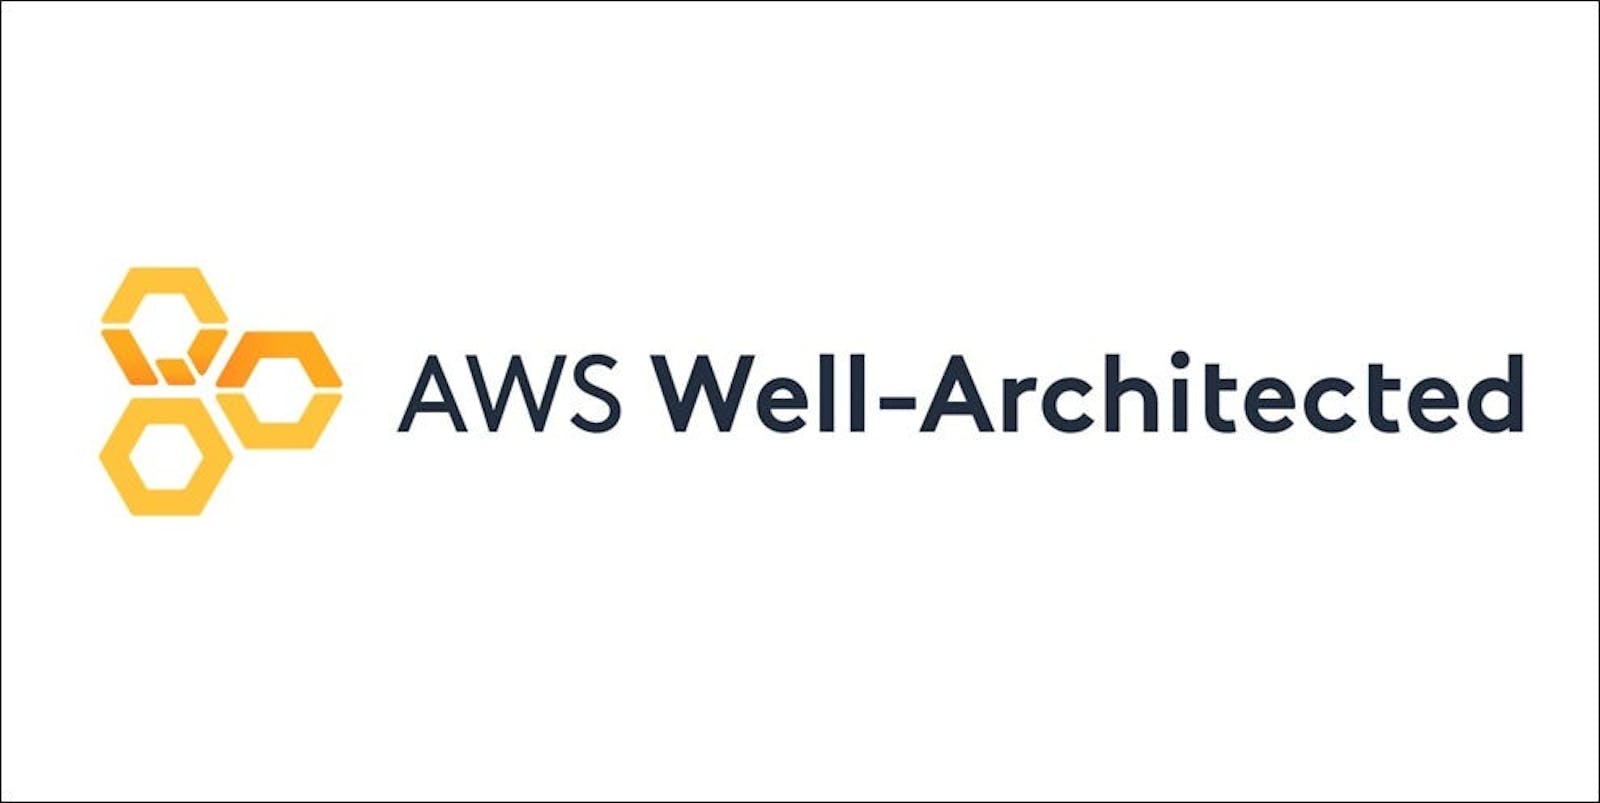 Understanding the AWS Well-Architected Framework